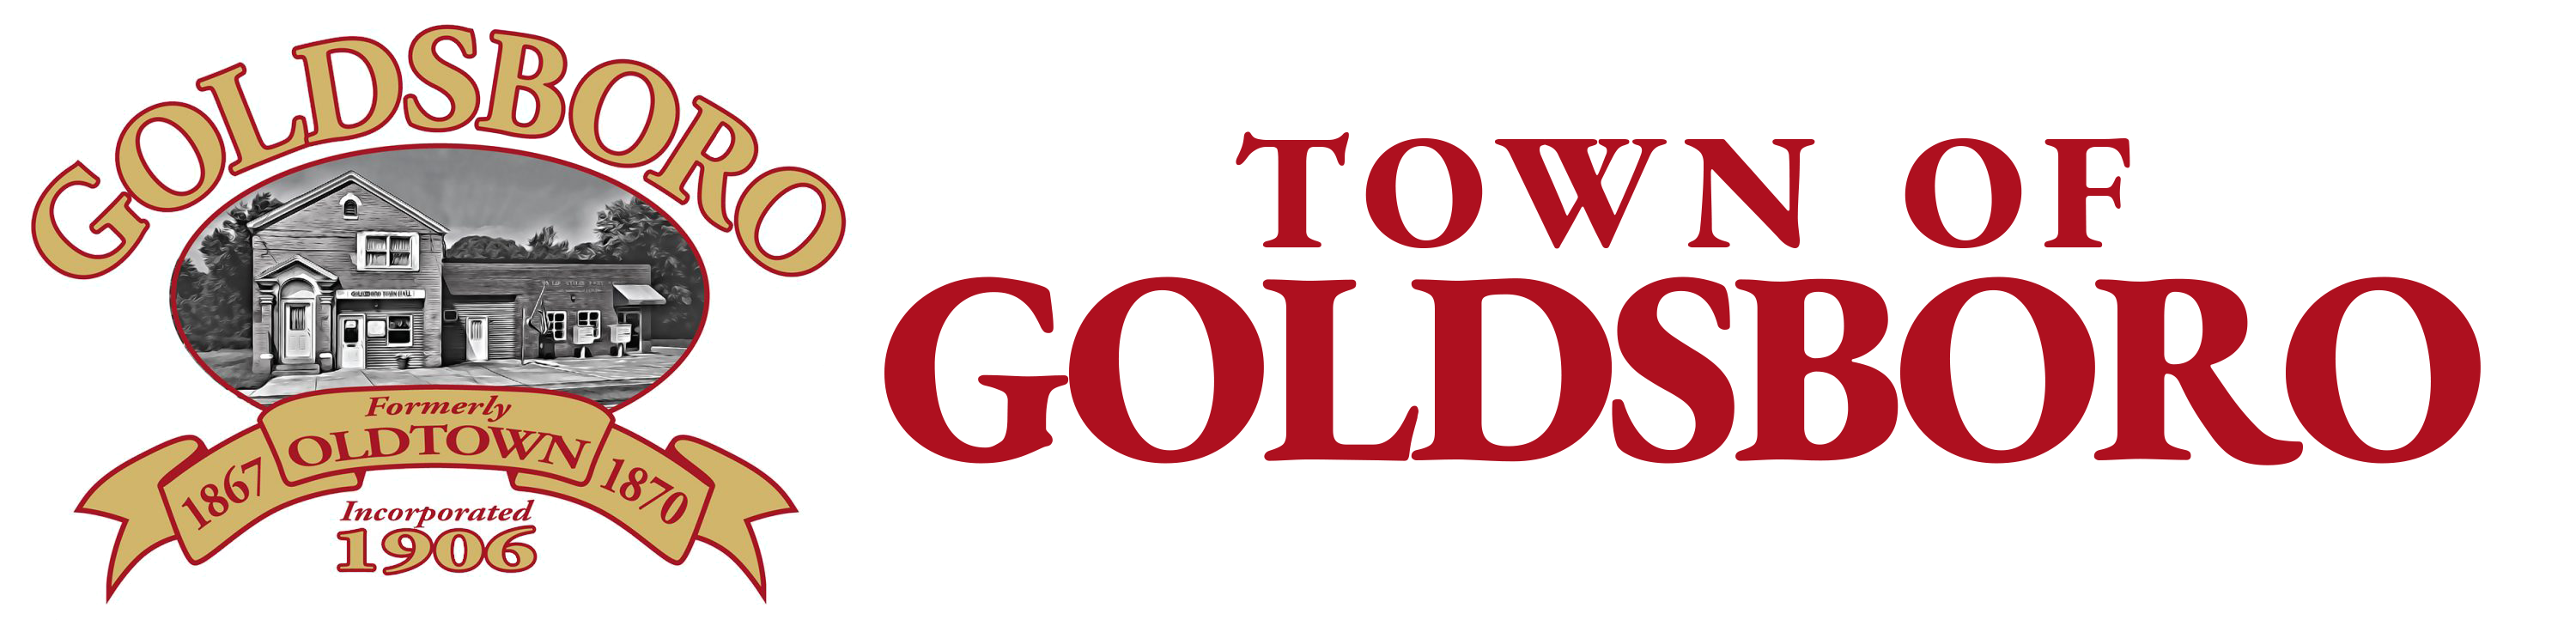 Town of Goldsboro